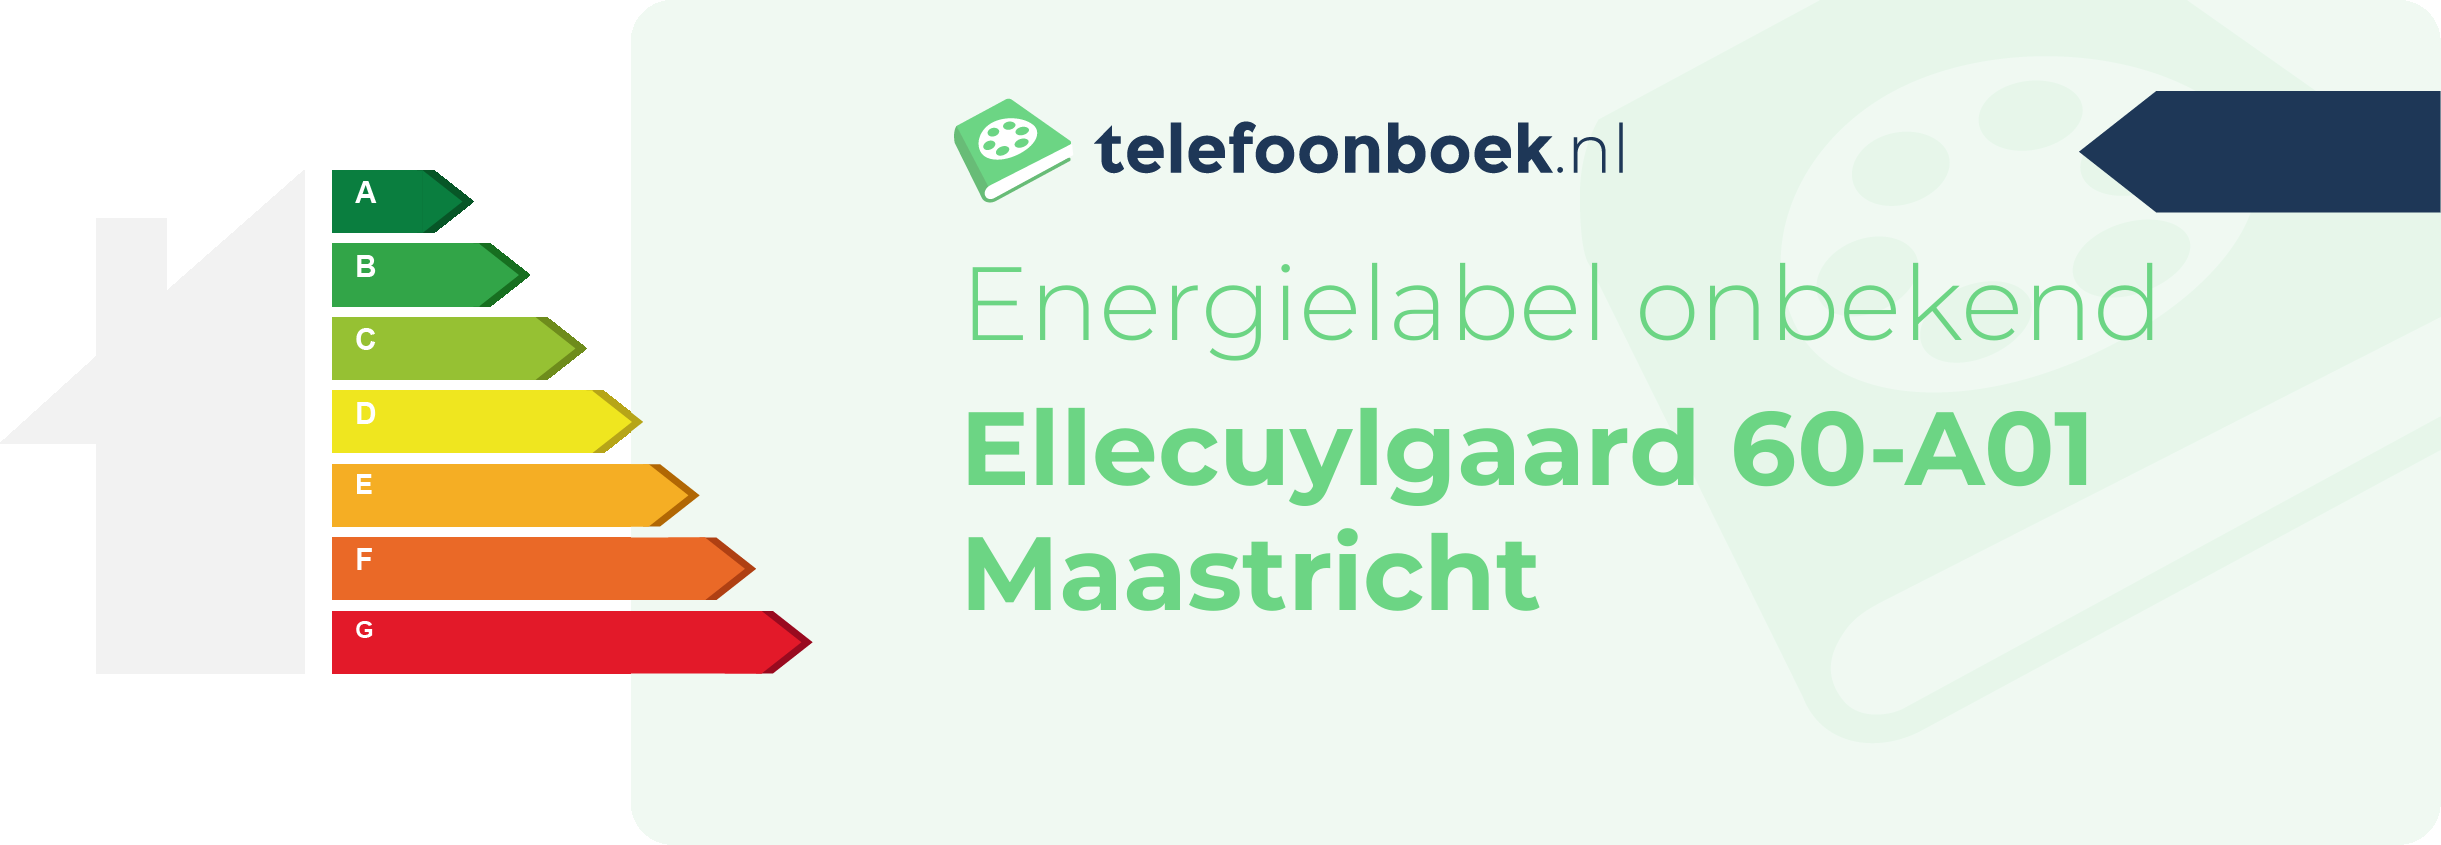 Energielabel Ellecuylgaard 60-A01 Maastricht